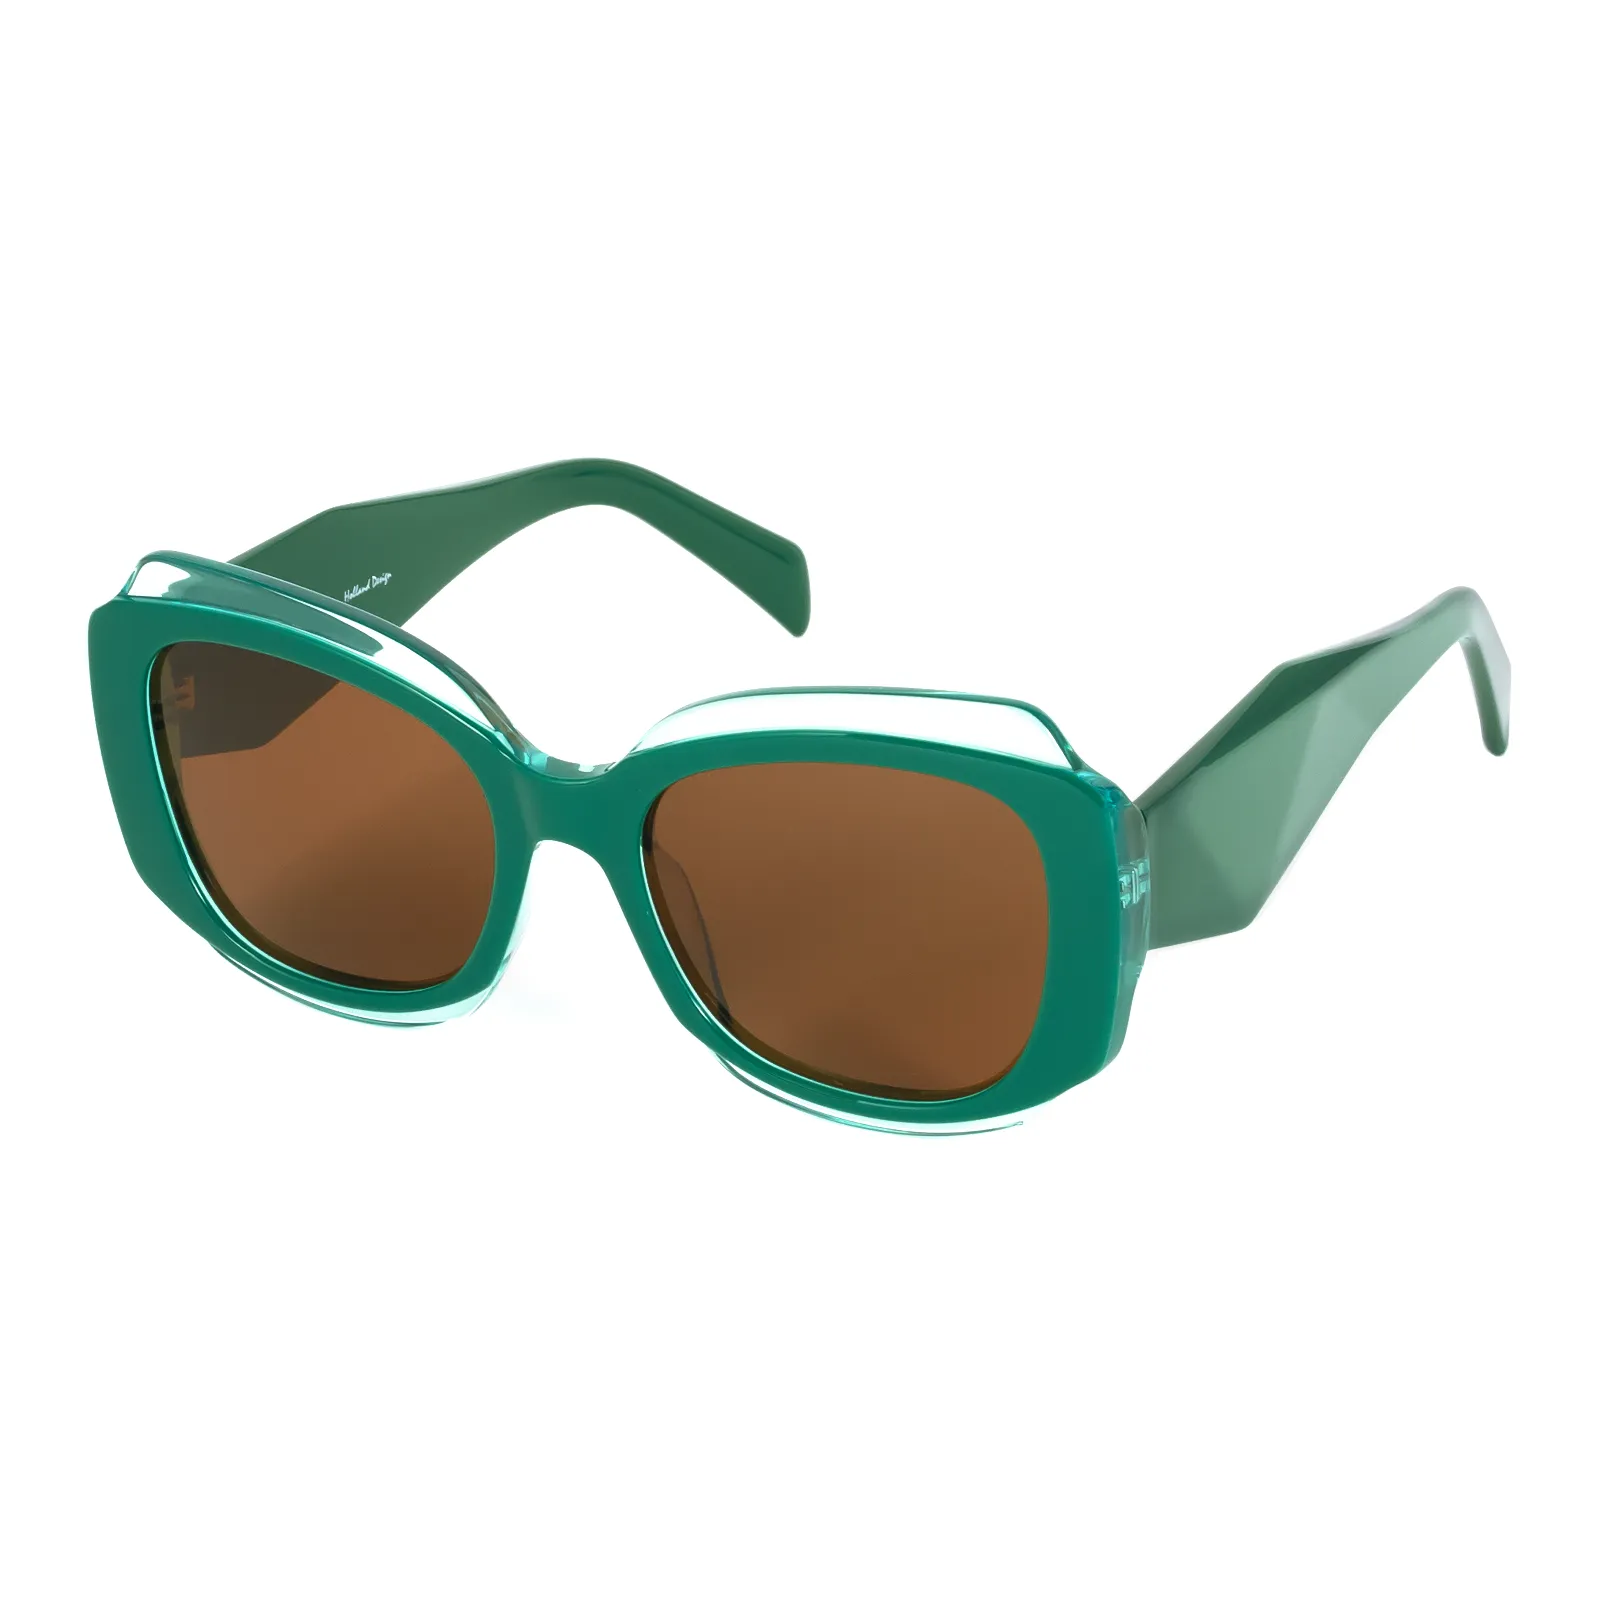 Rosemary - Square Green Sunglasses for Women